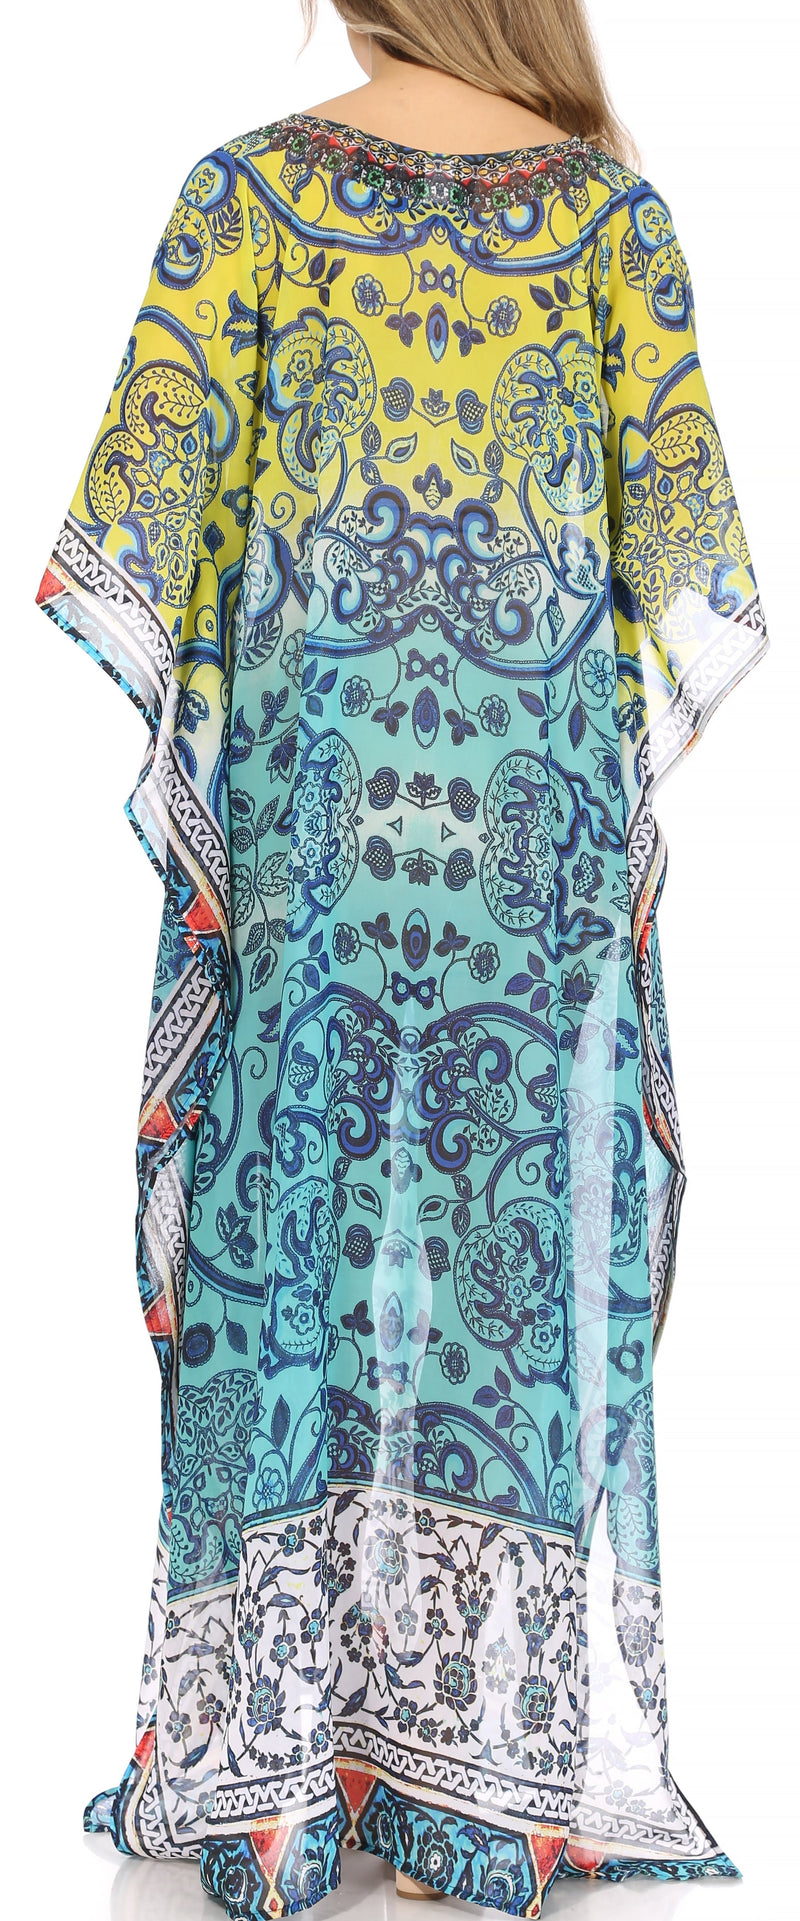 Sakkas Wilder  Printed Design Long Sheer Rhinestone Caftan Dress / Cover Up